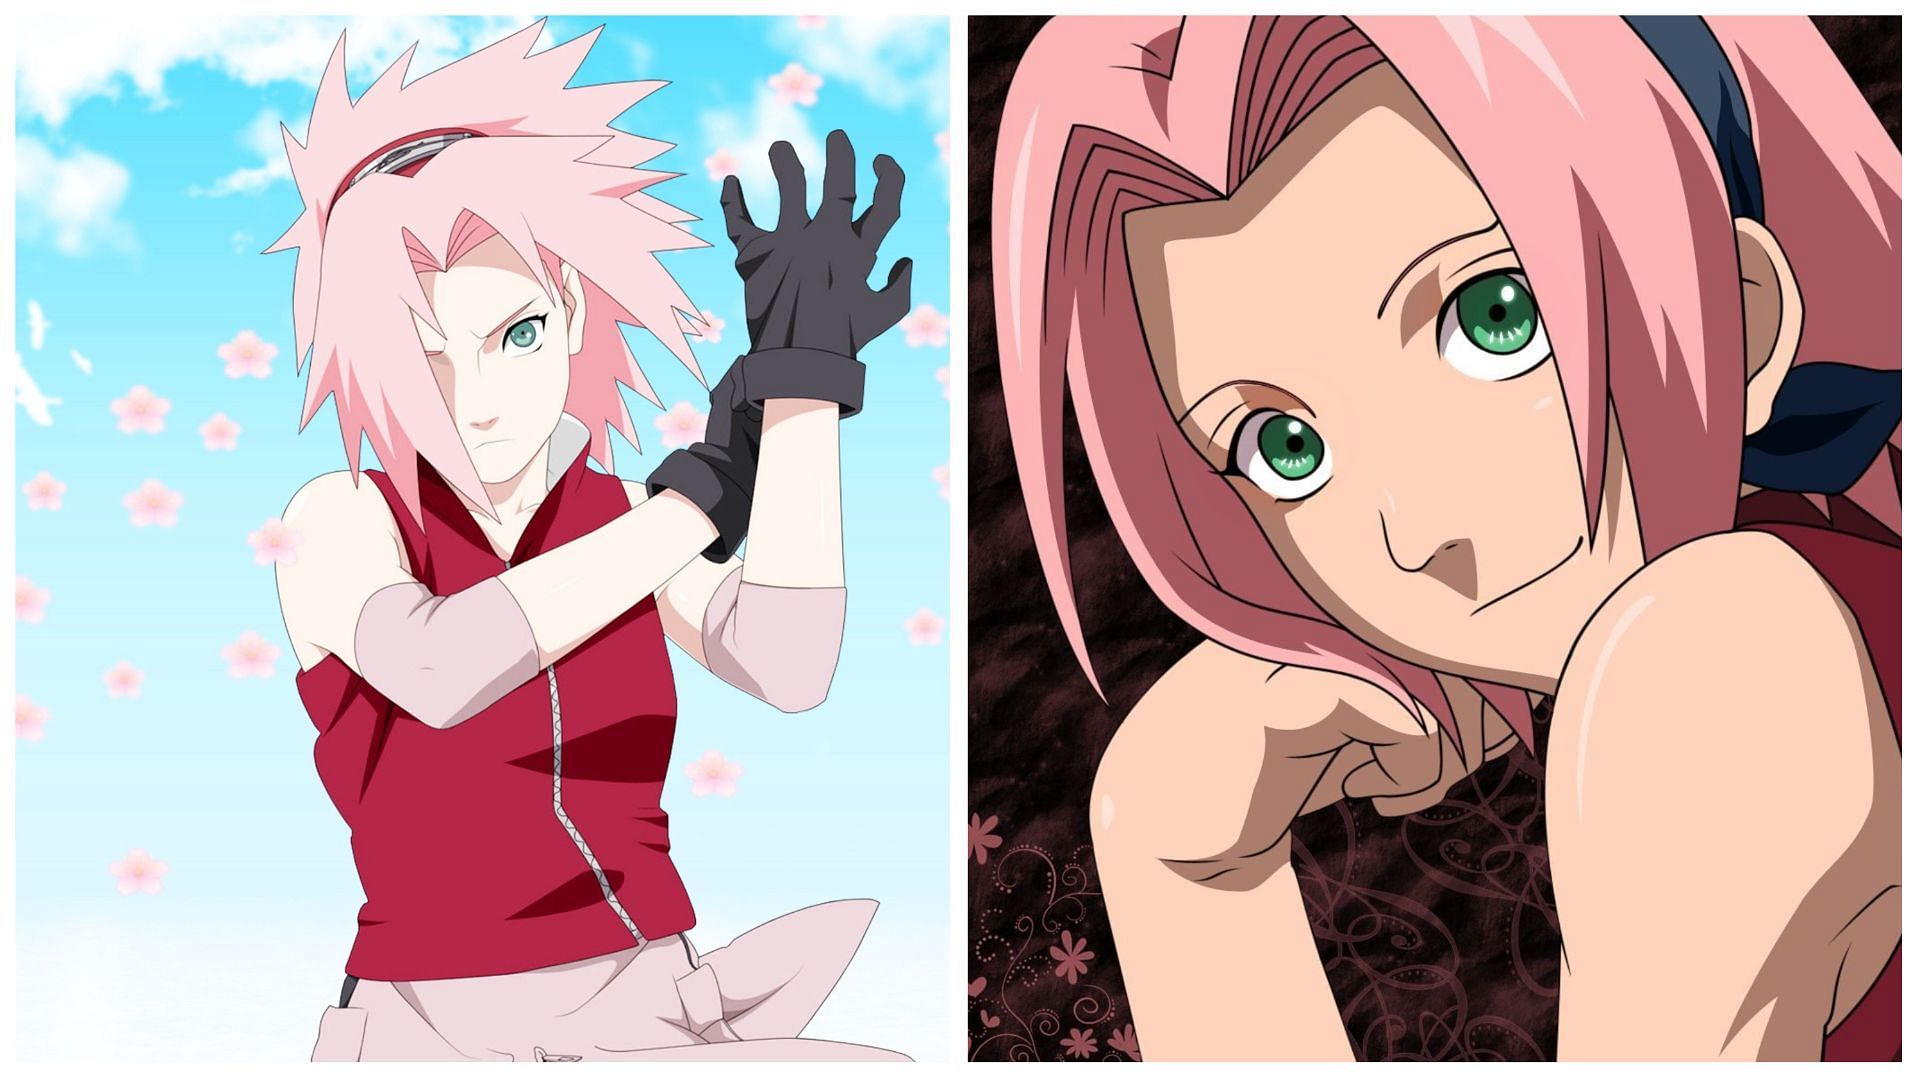 Sakura from the anime, Naruto (Images via Studio Pierrot)